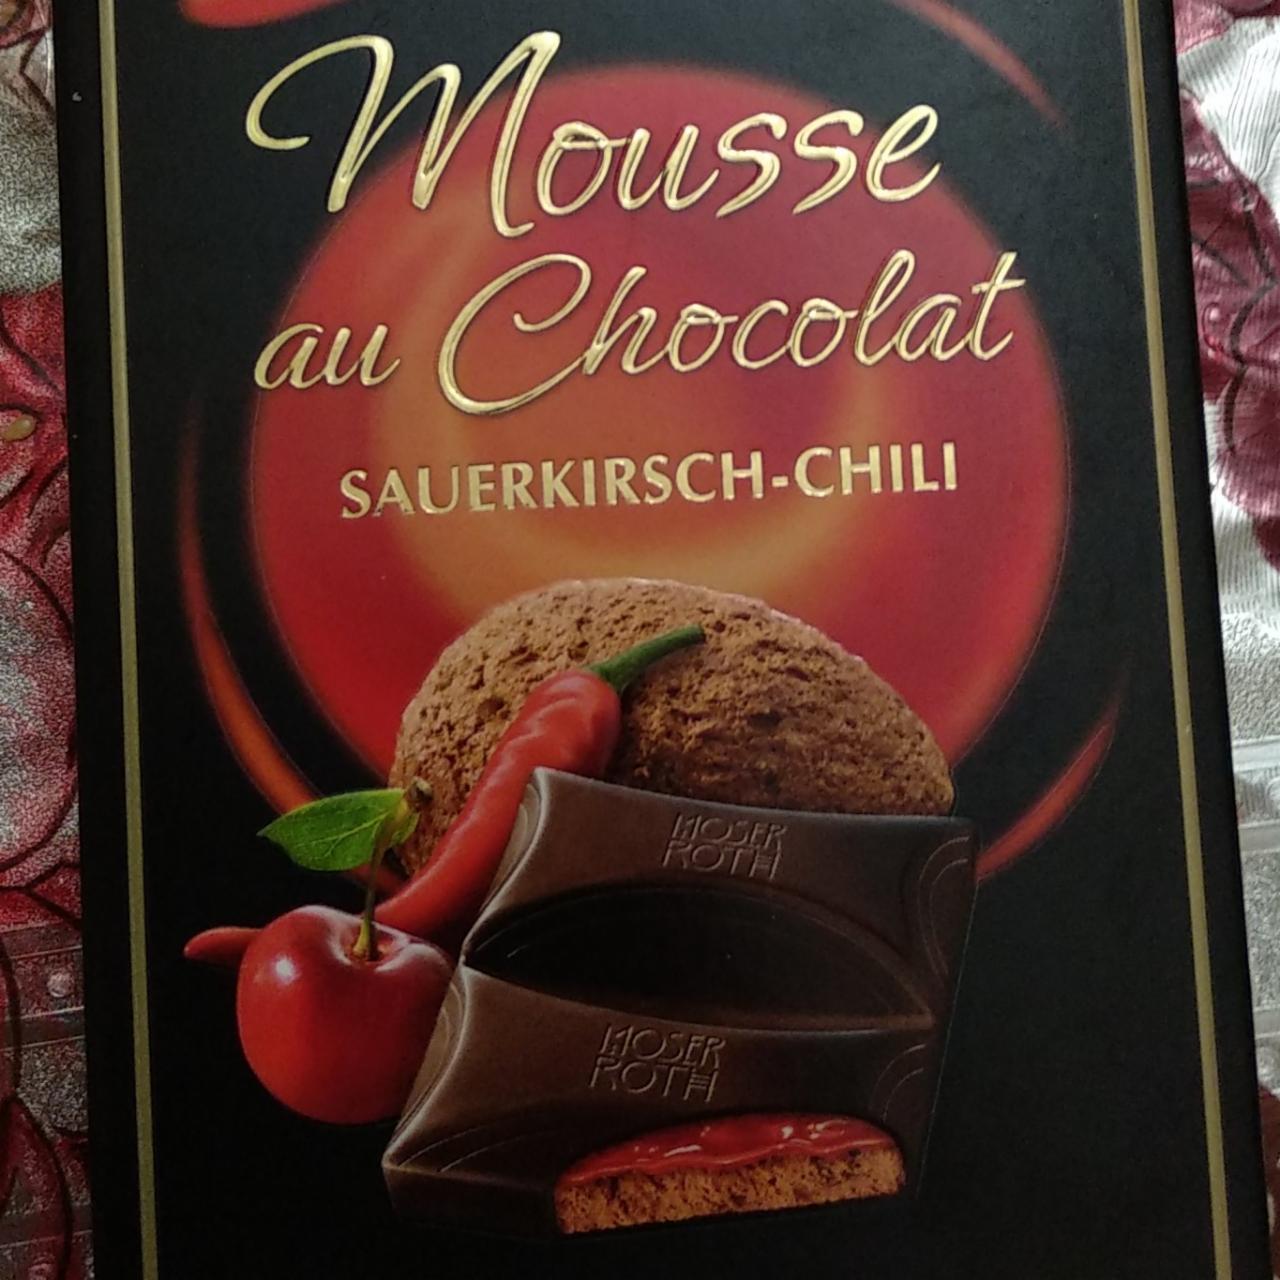 Фото - Черный шоколад вишня чили Mousse au Chocolat sauerkirch-chili Moser Roth